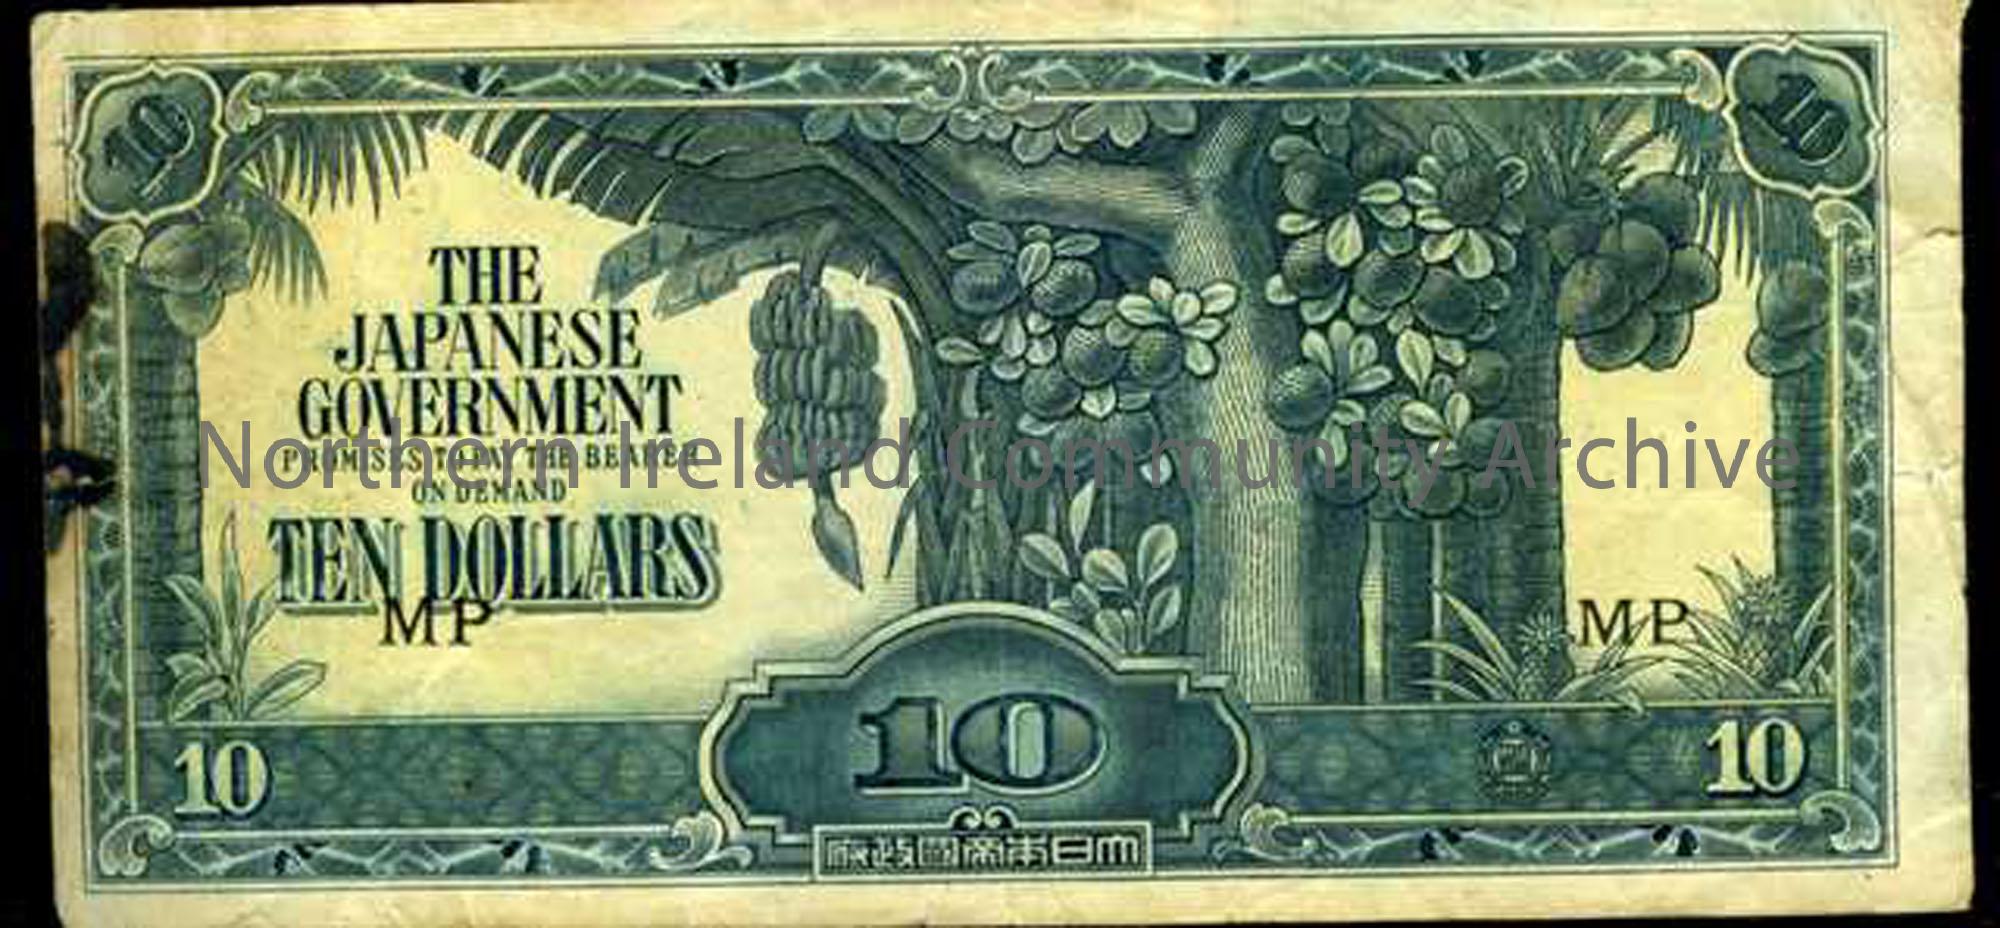 Japanese 10 dollar note